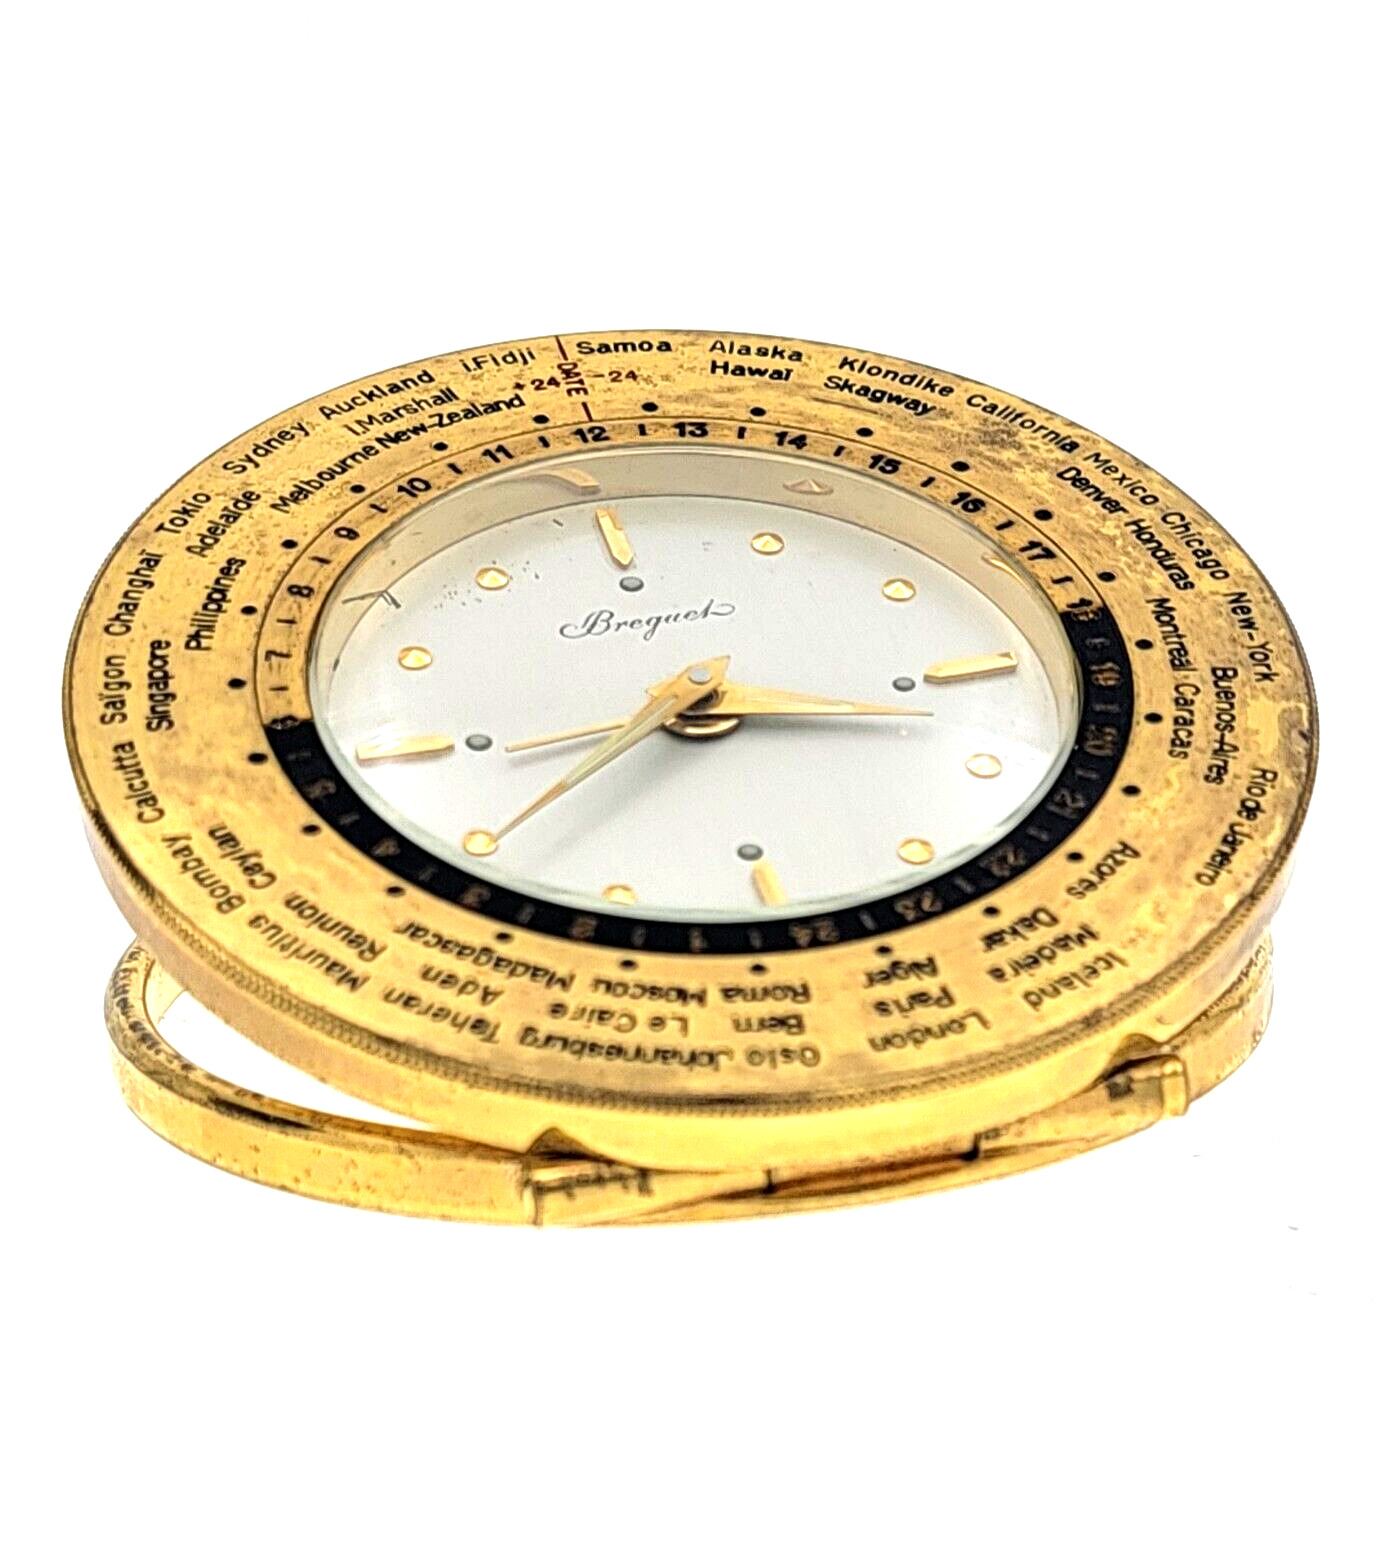 Breguet Rare Vintage Gilt World Time Desk Clock with Alarm